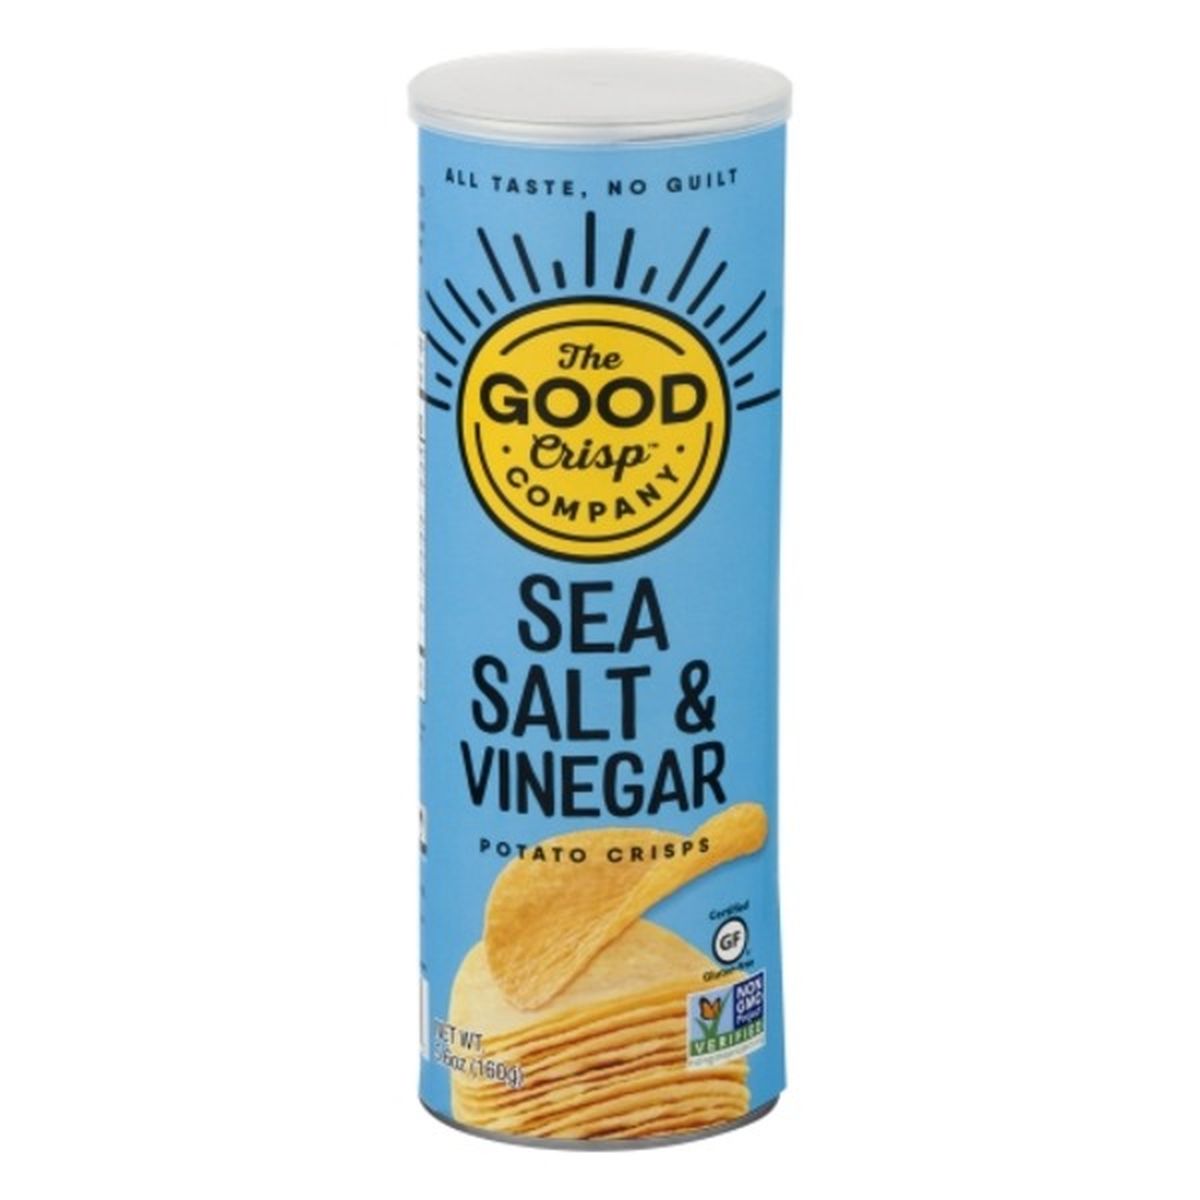 Calories in The Good Crisp Company Potato Crisps, Gluten Free, Sea Salt & Vinegar